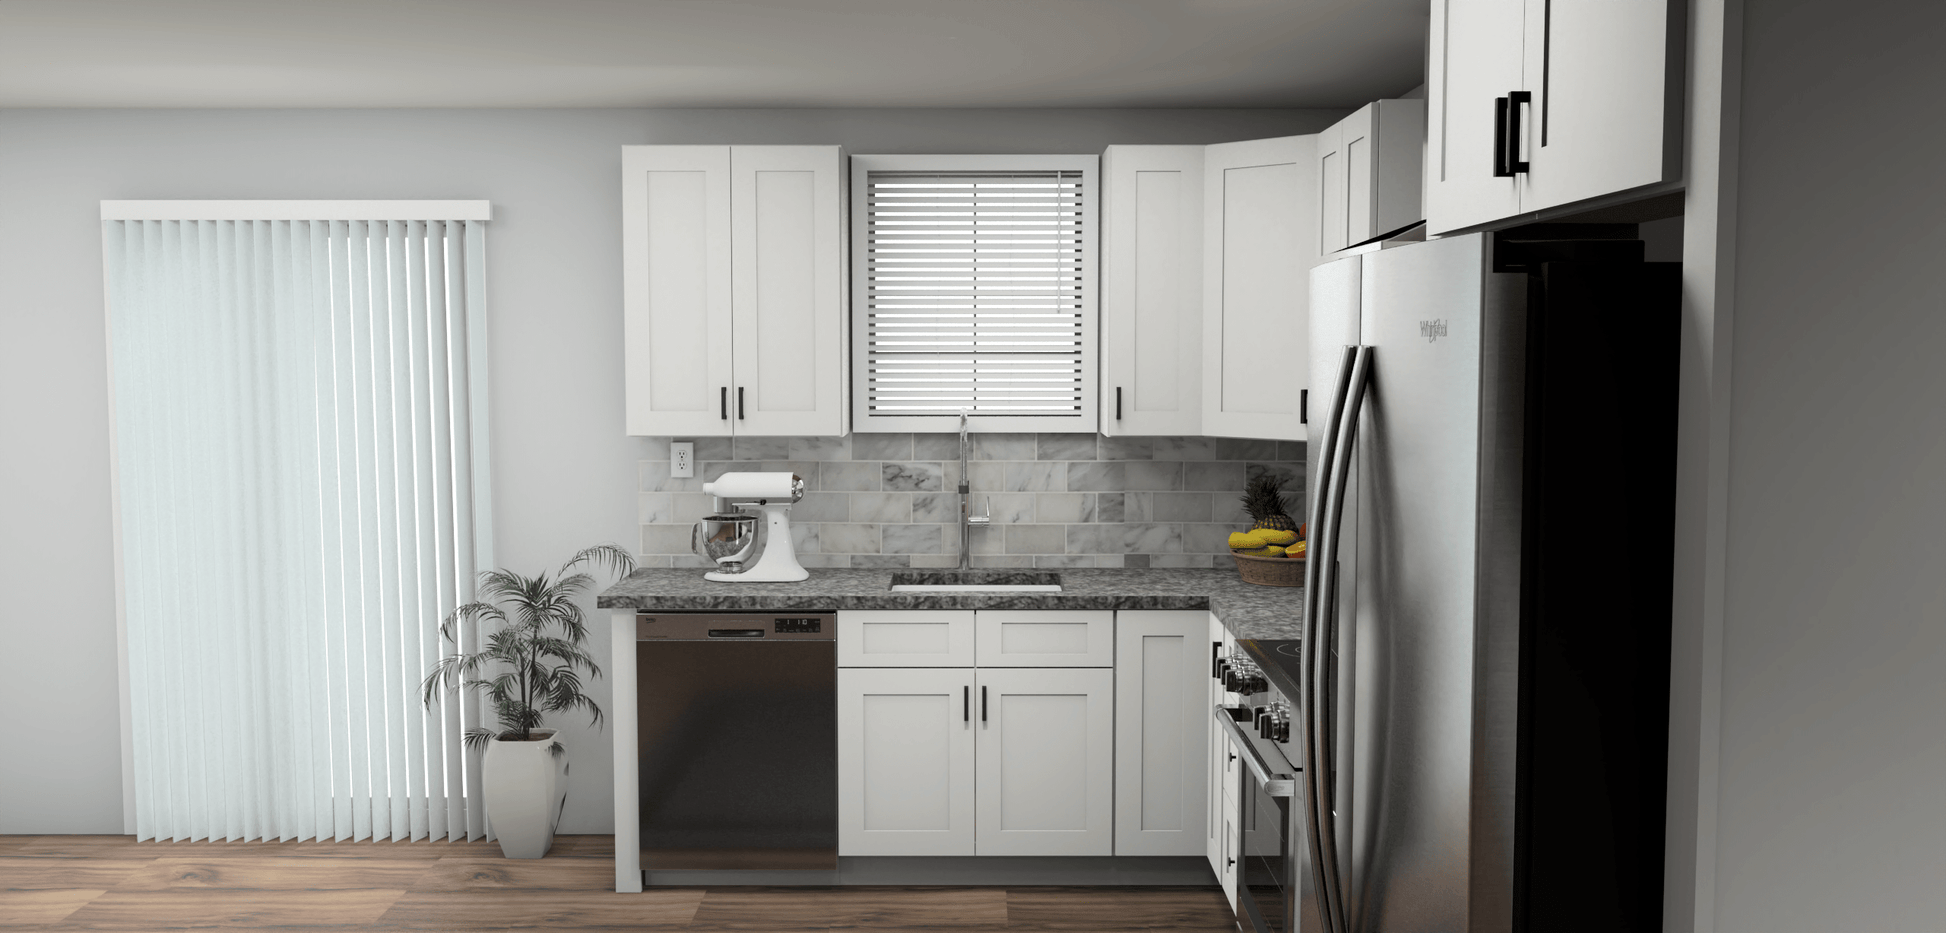 Fabuwood Allure Galaxy Frost 8 x 13 L Shaped Kitchen Side Layout Photo